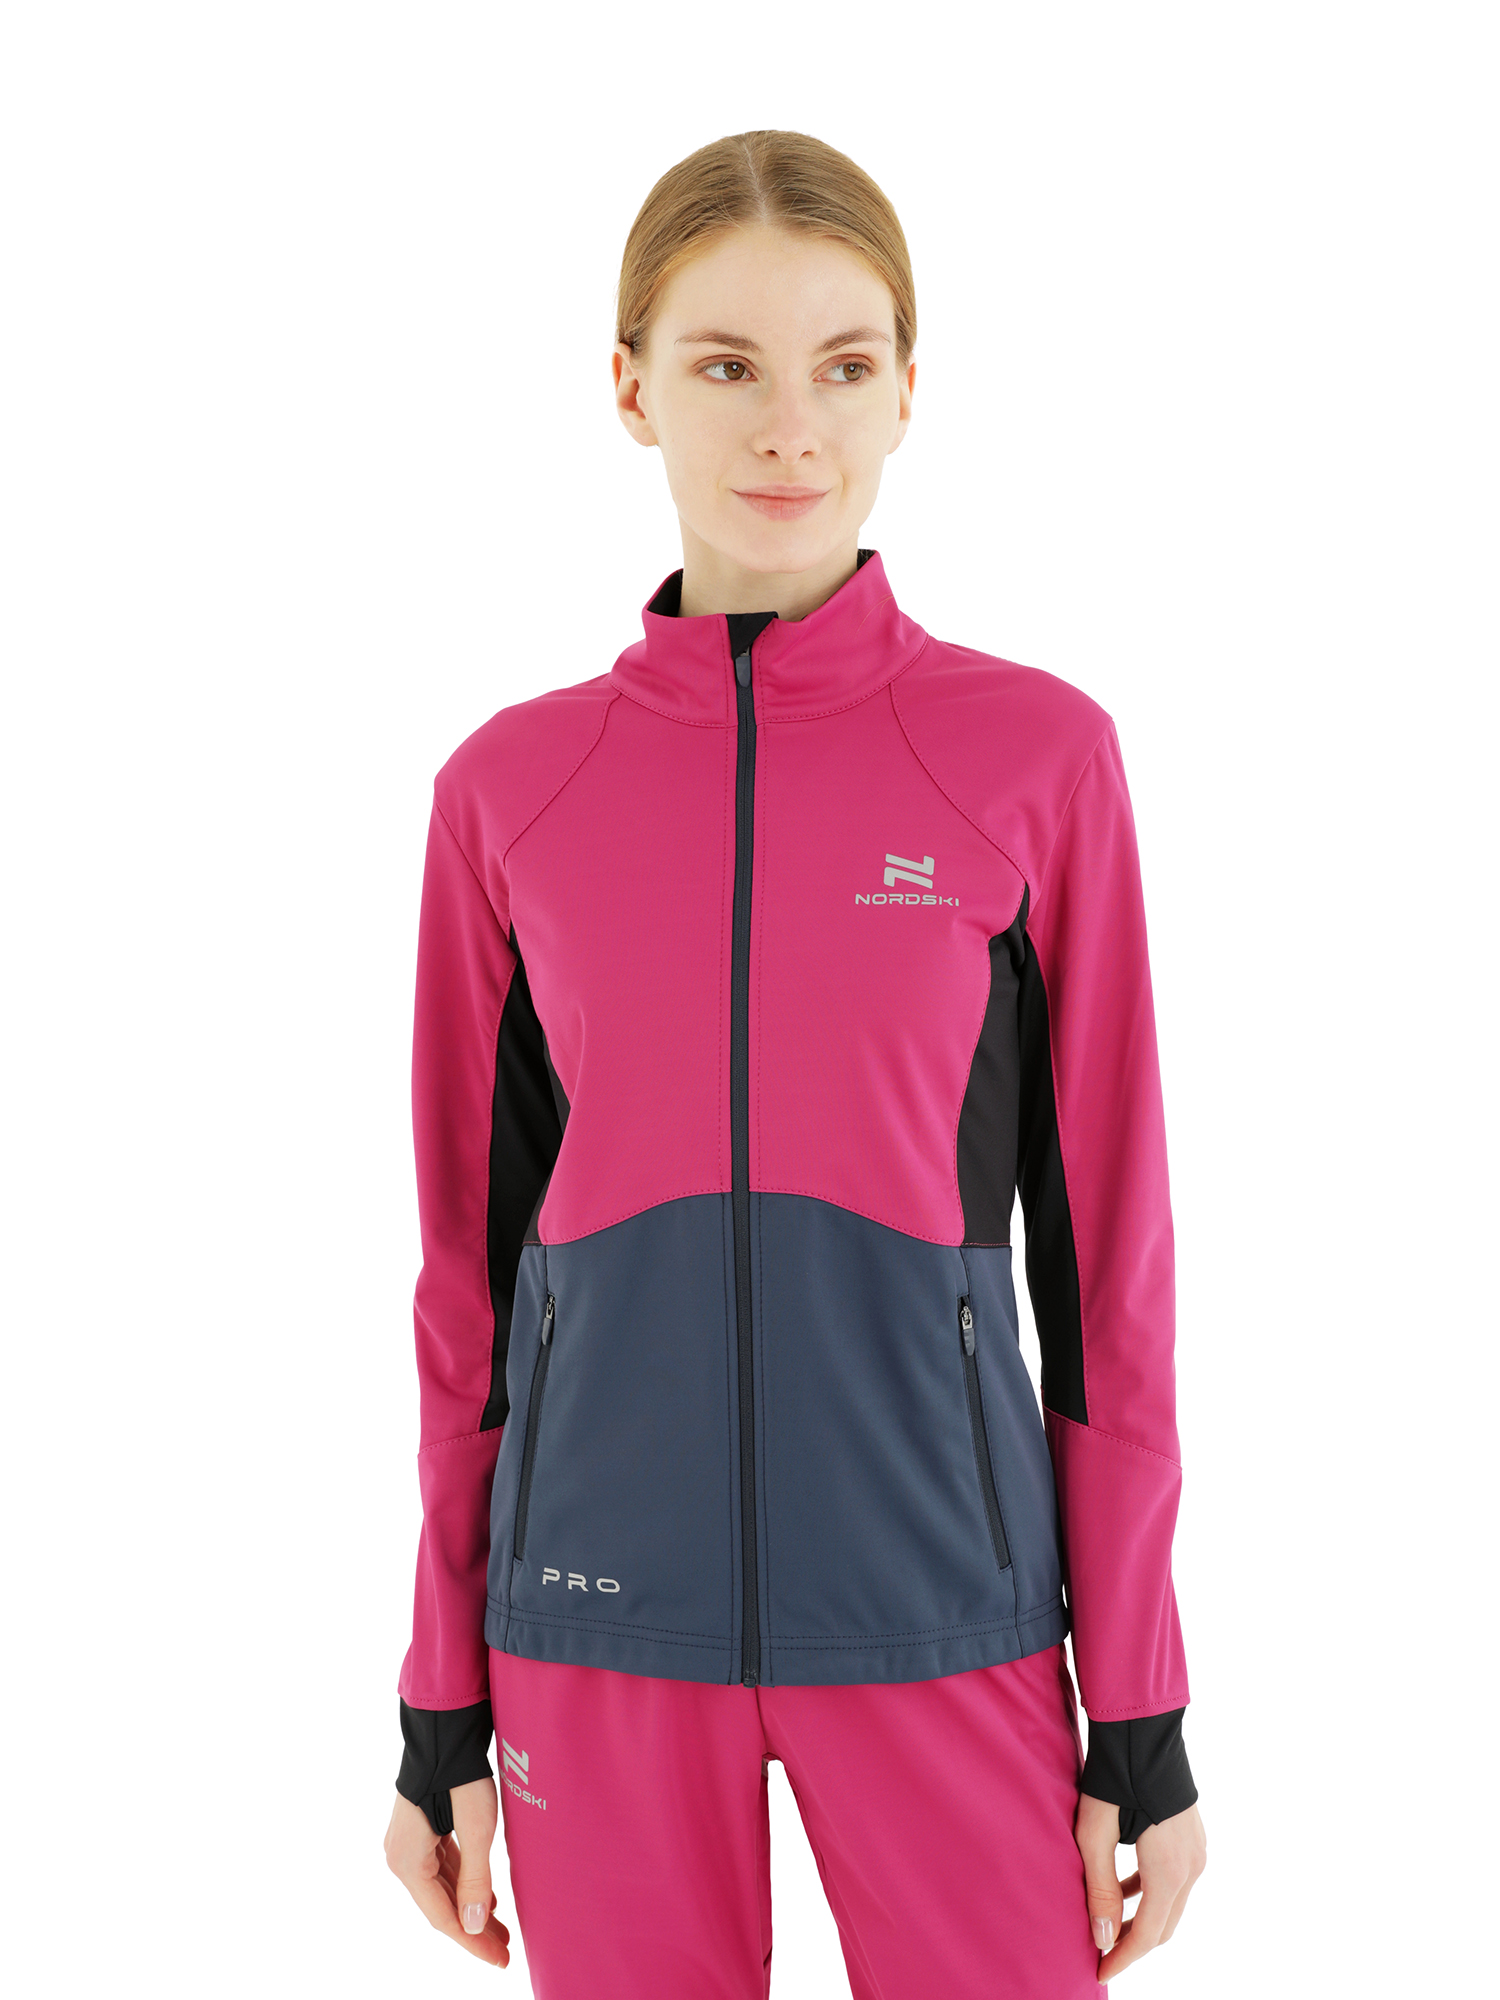 Куртка женская NordSki Pro W розовая S